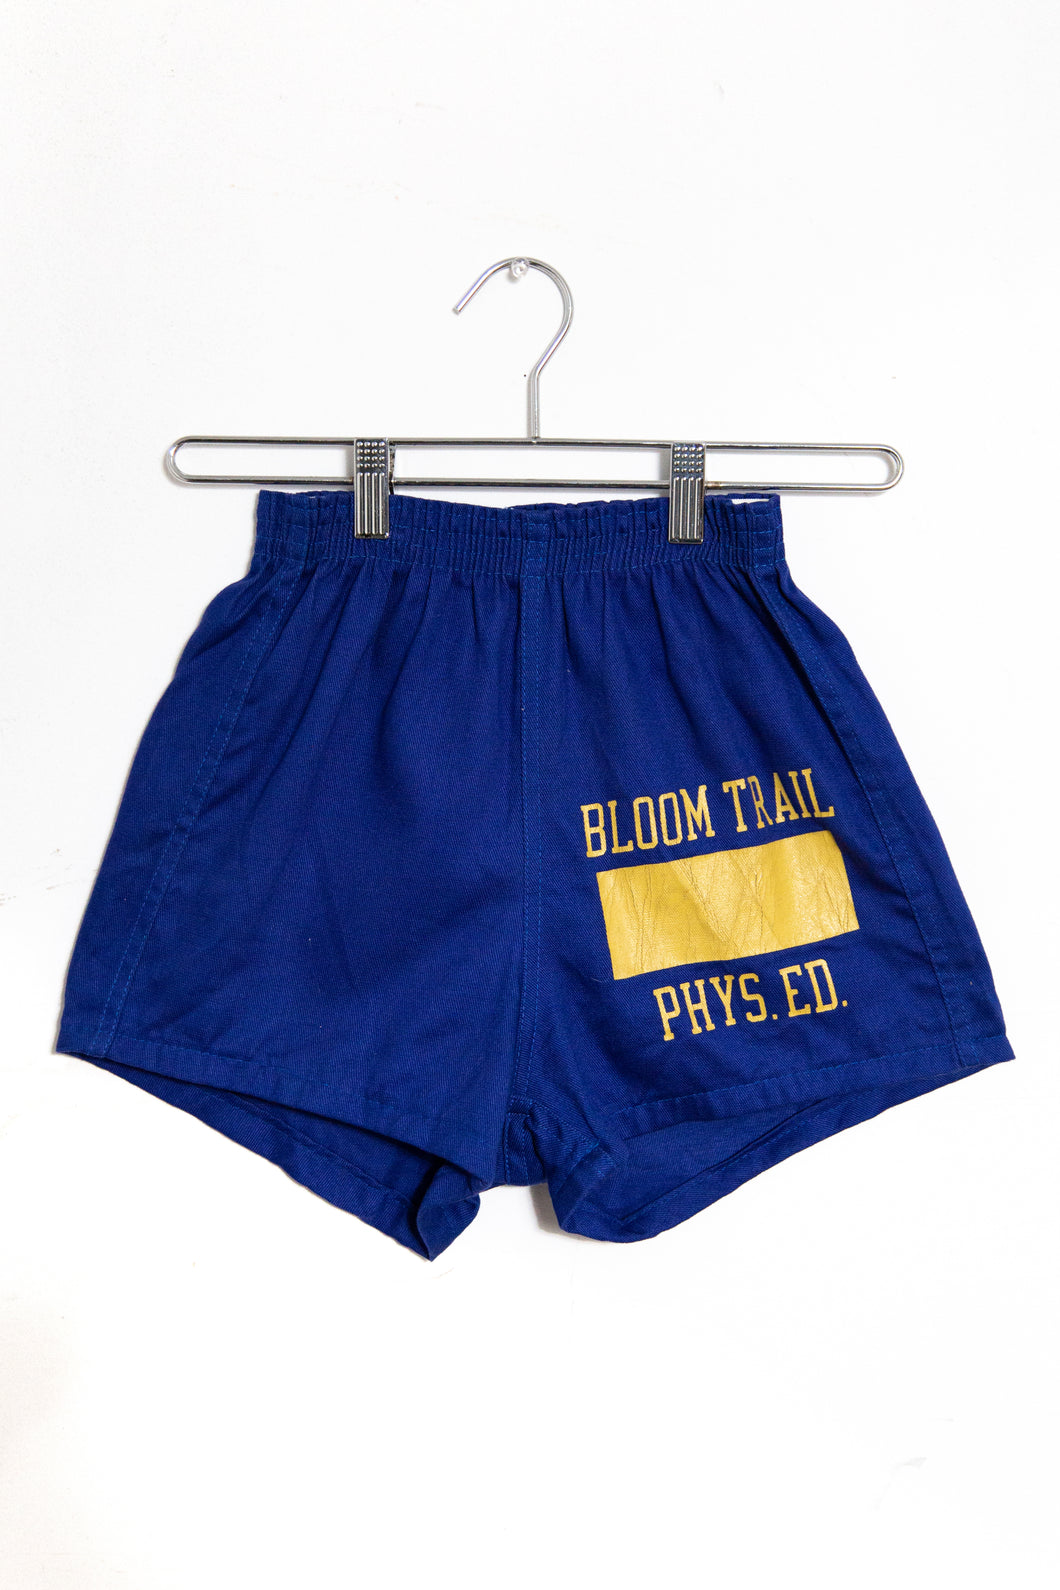 1980s Champion Gym Shorts